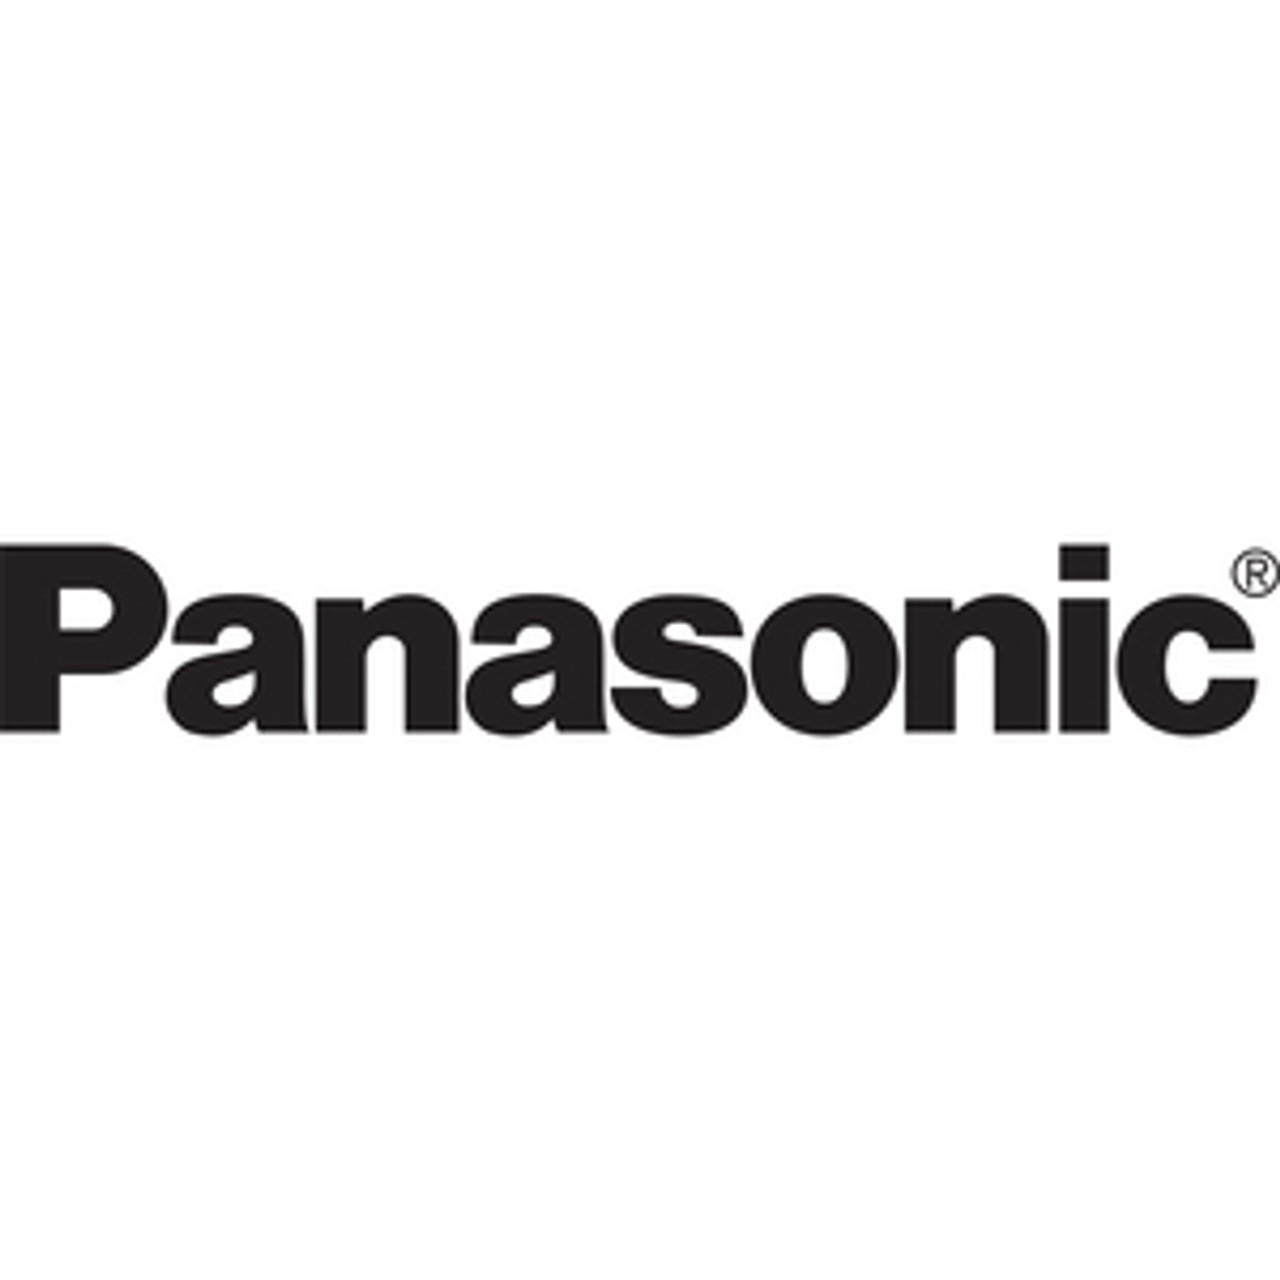 Panasonic 256 GB Solid State Drive - Internal